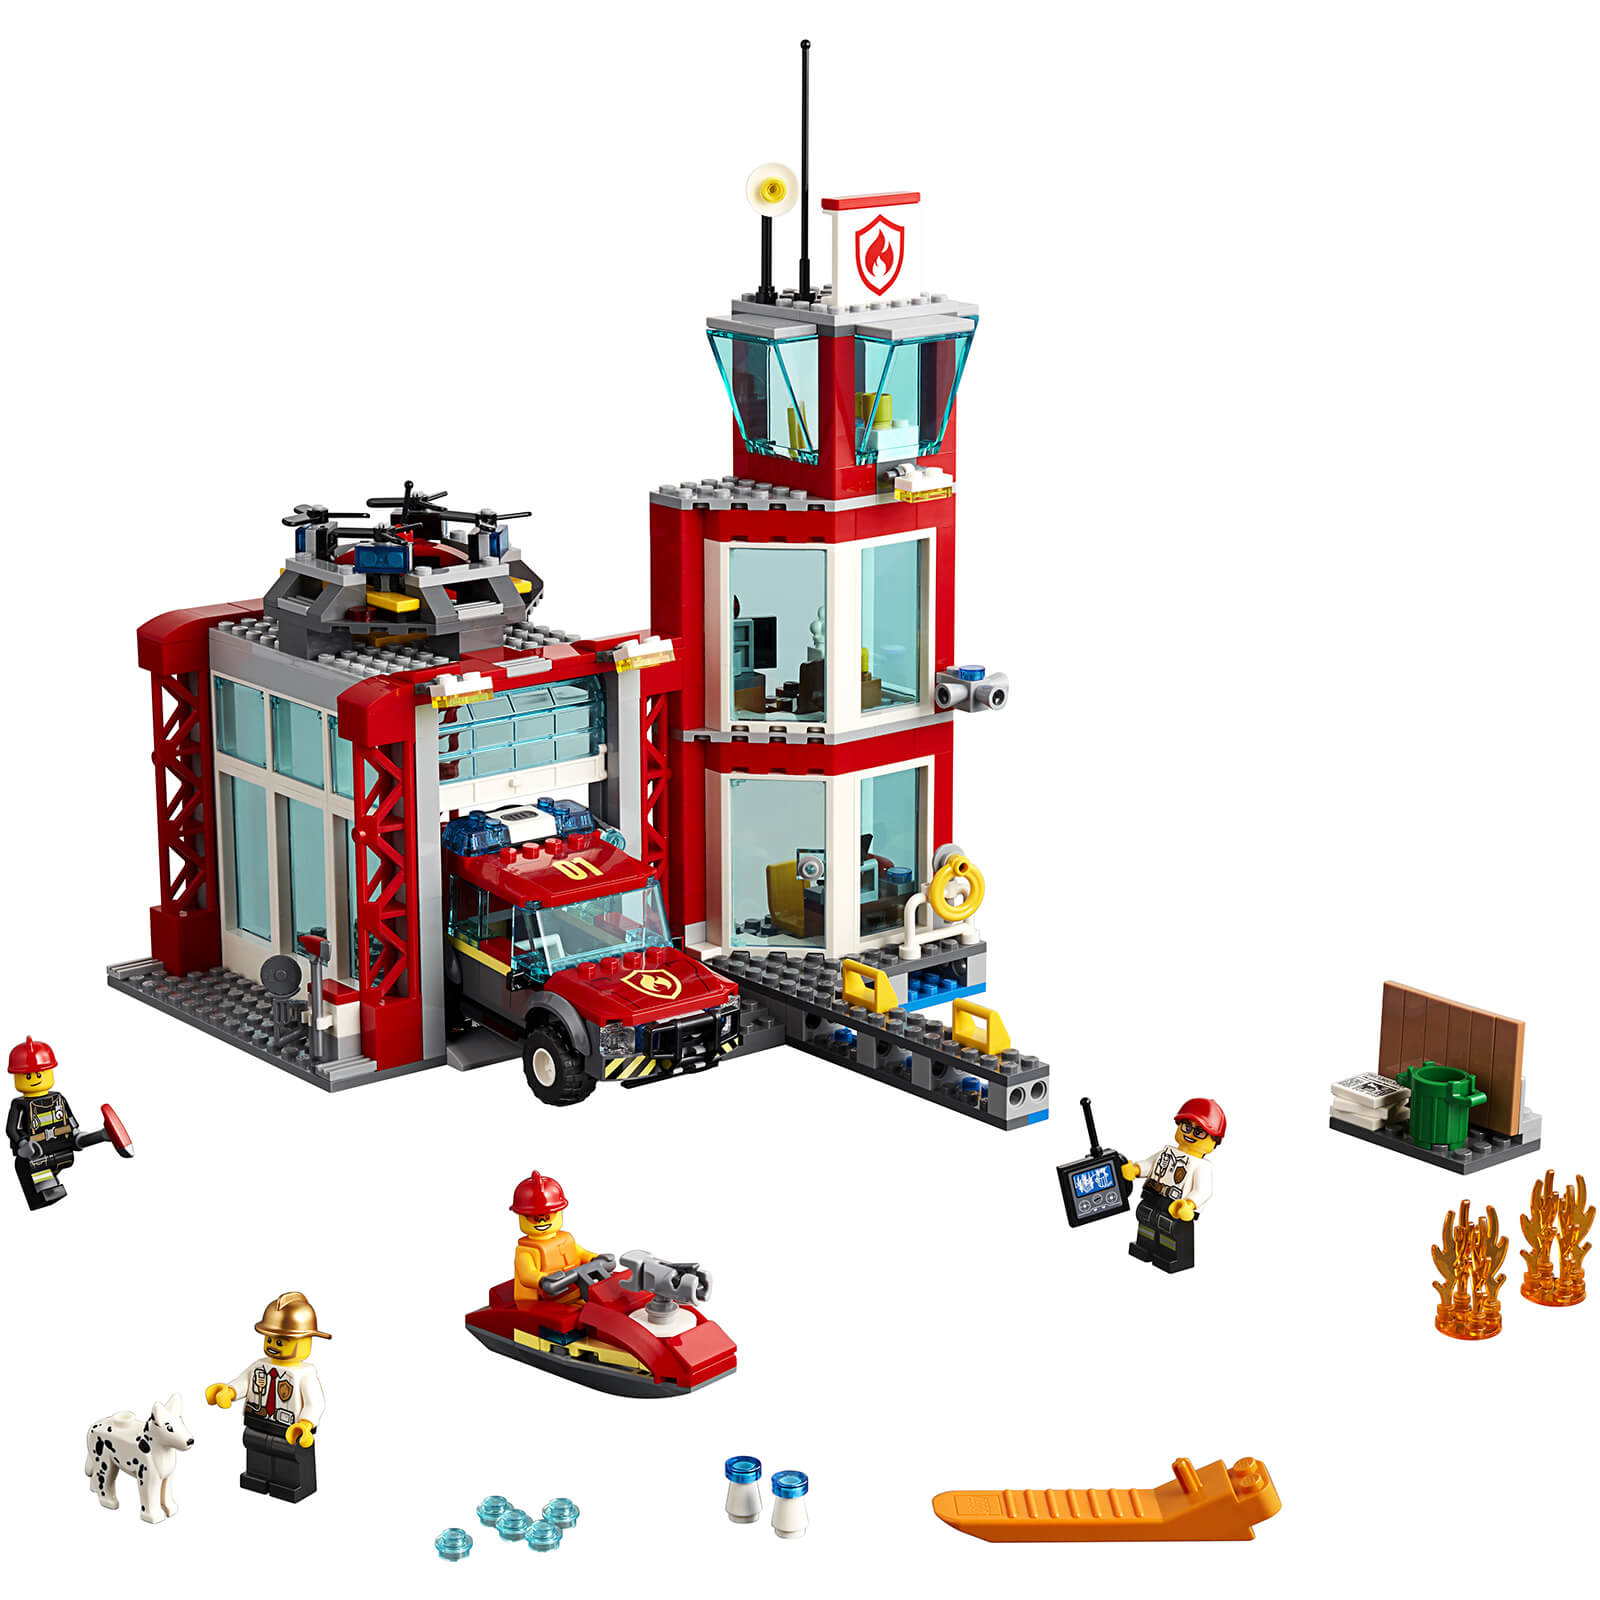 LEGO City: Fire Station Building Set (60215)